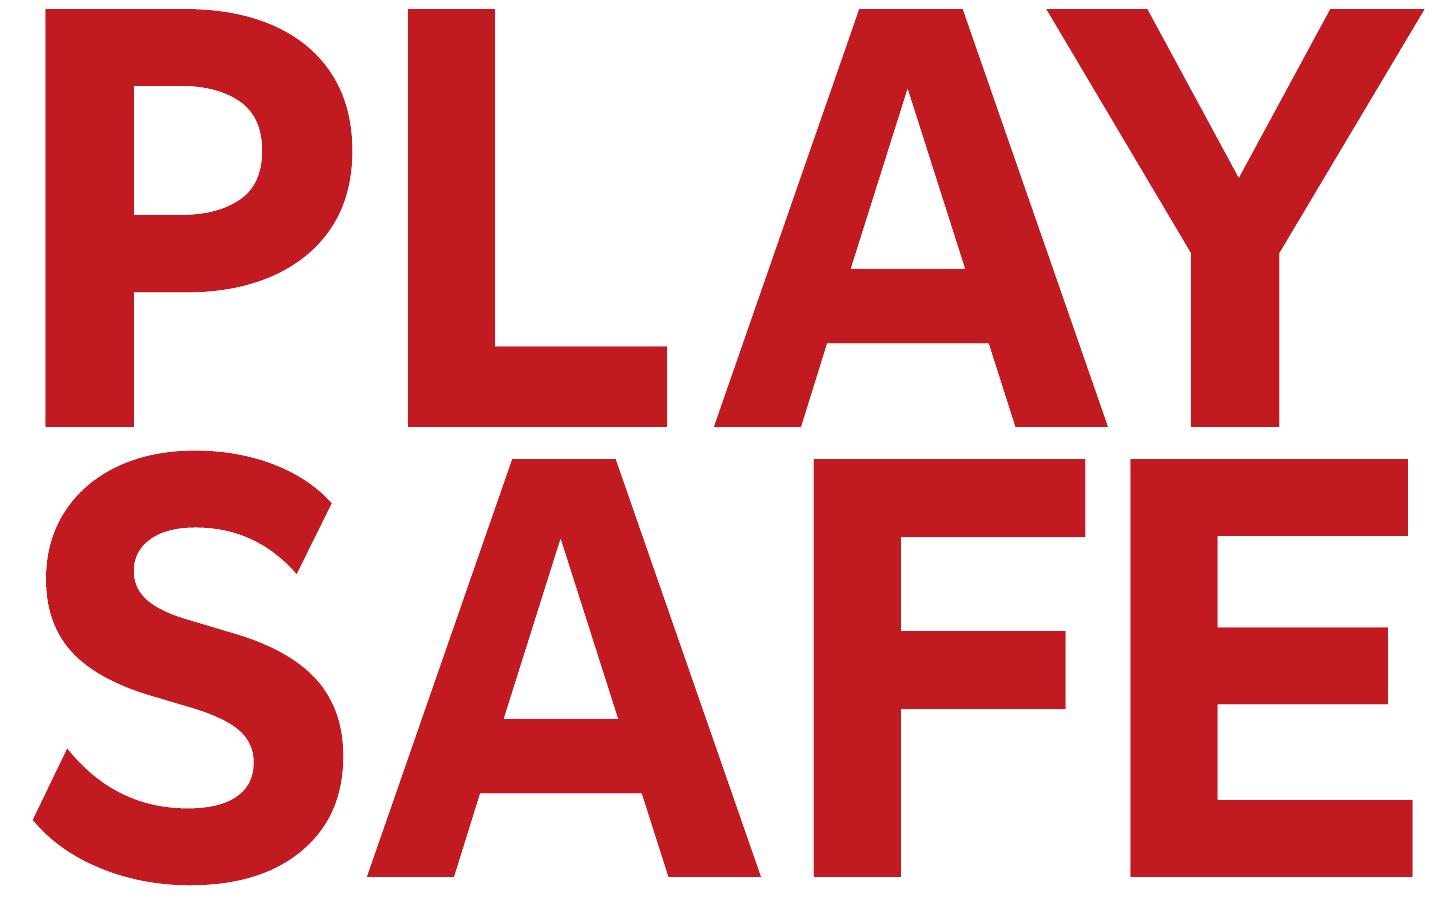 PLAY SAFE